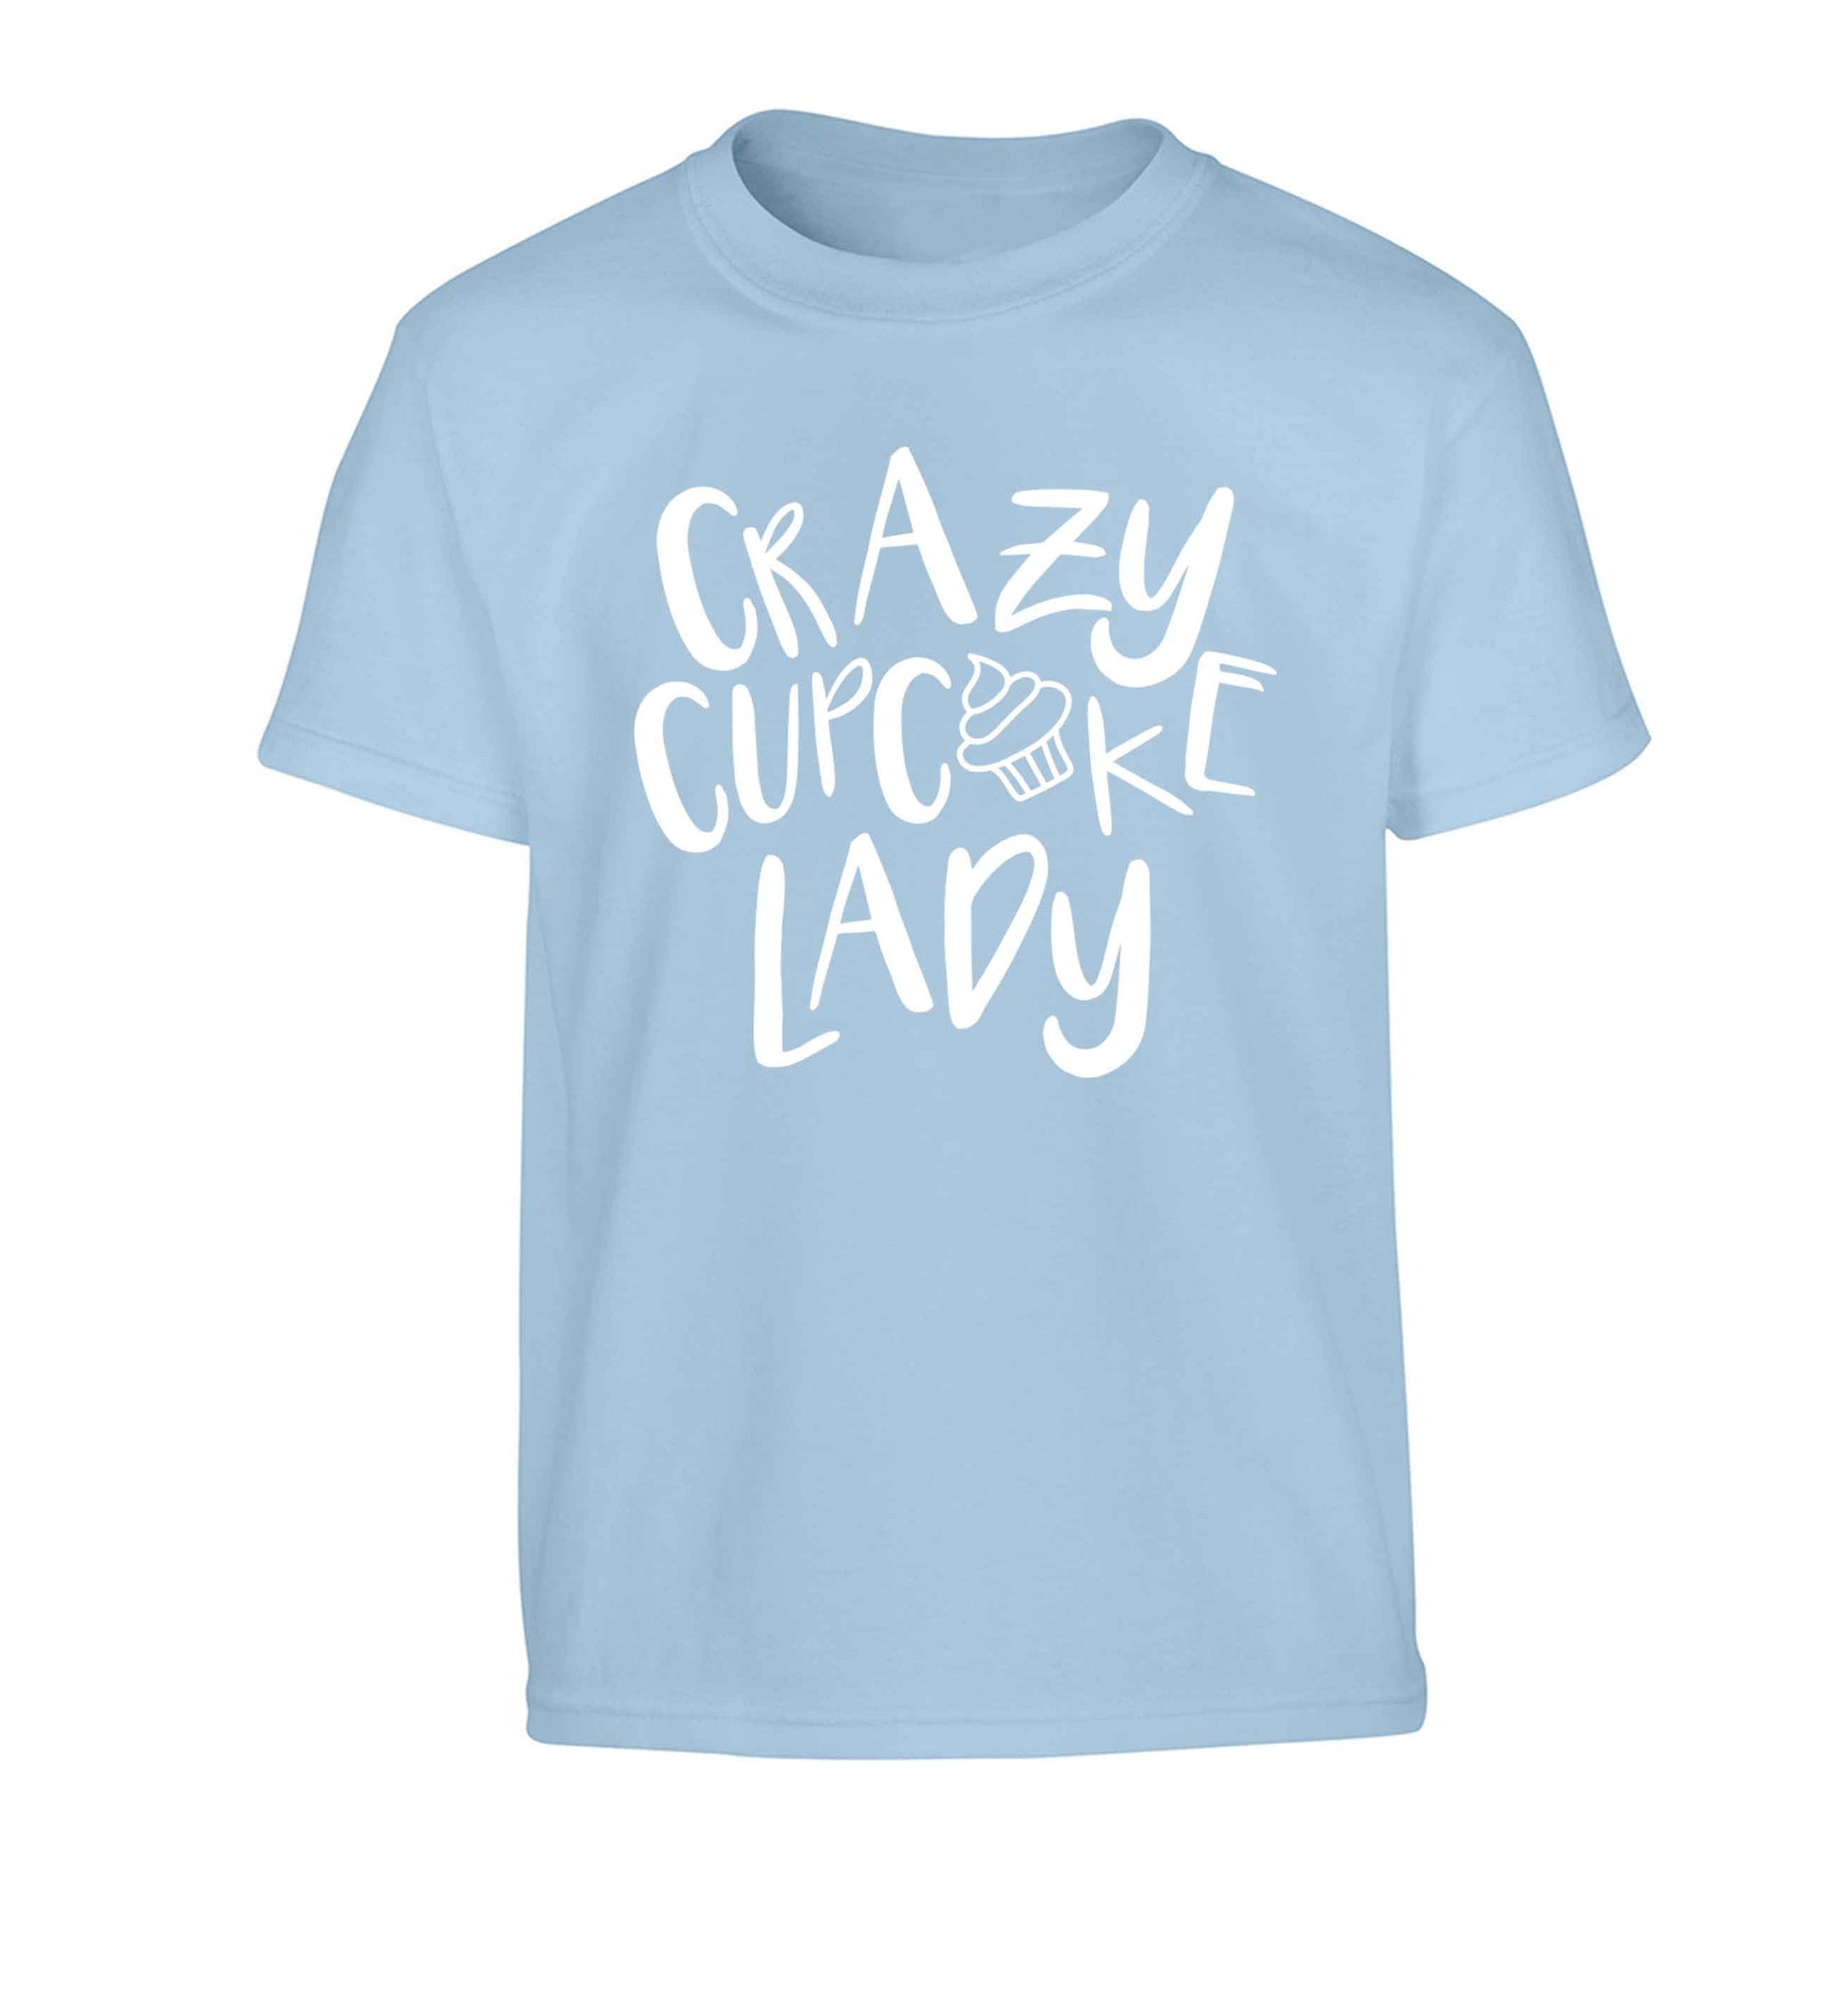 Crazy cupcake lady Children's light blue Tshirt 12-13 Years